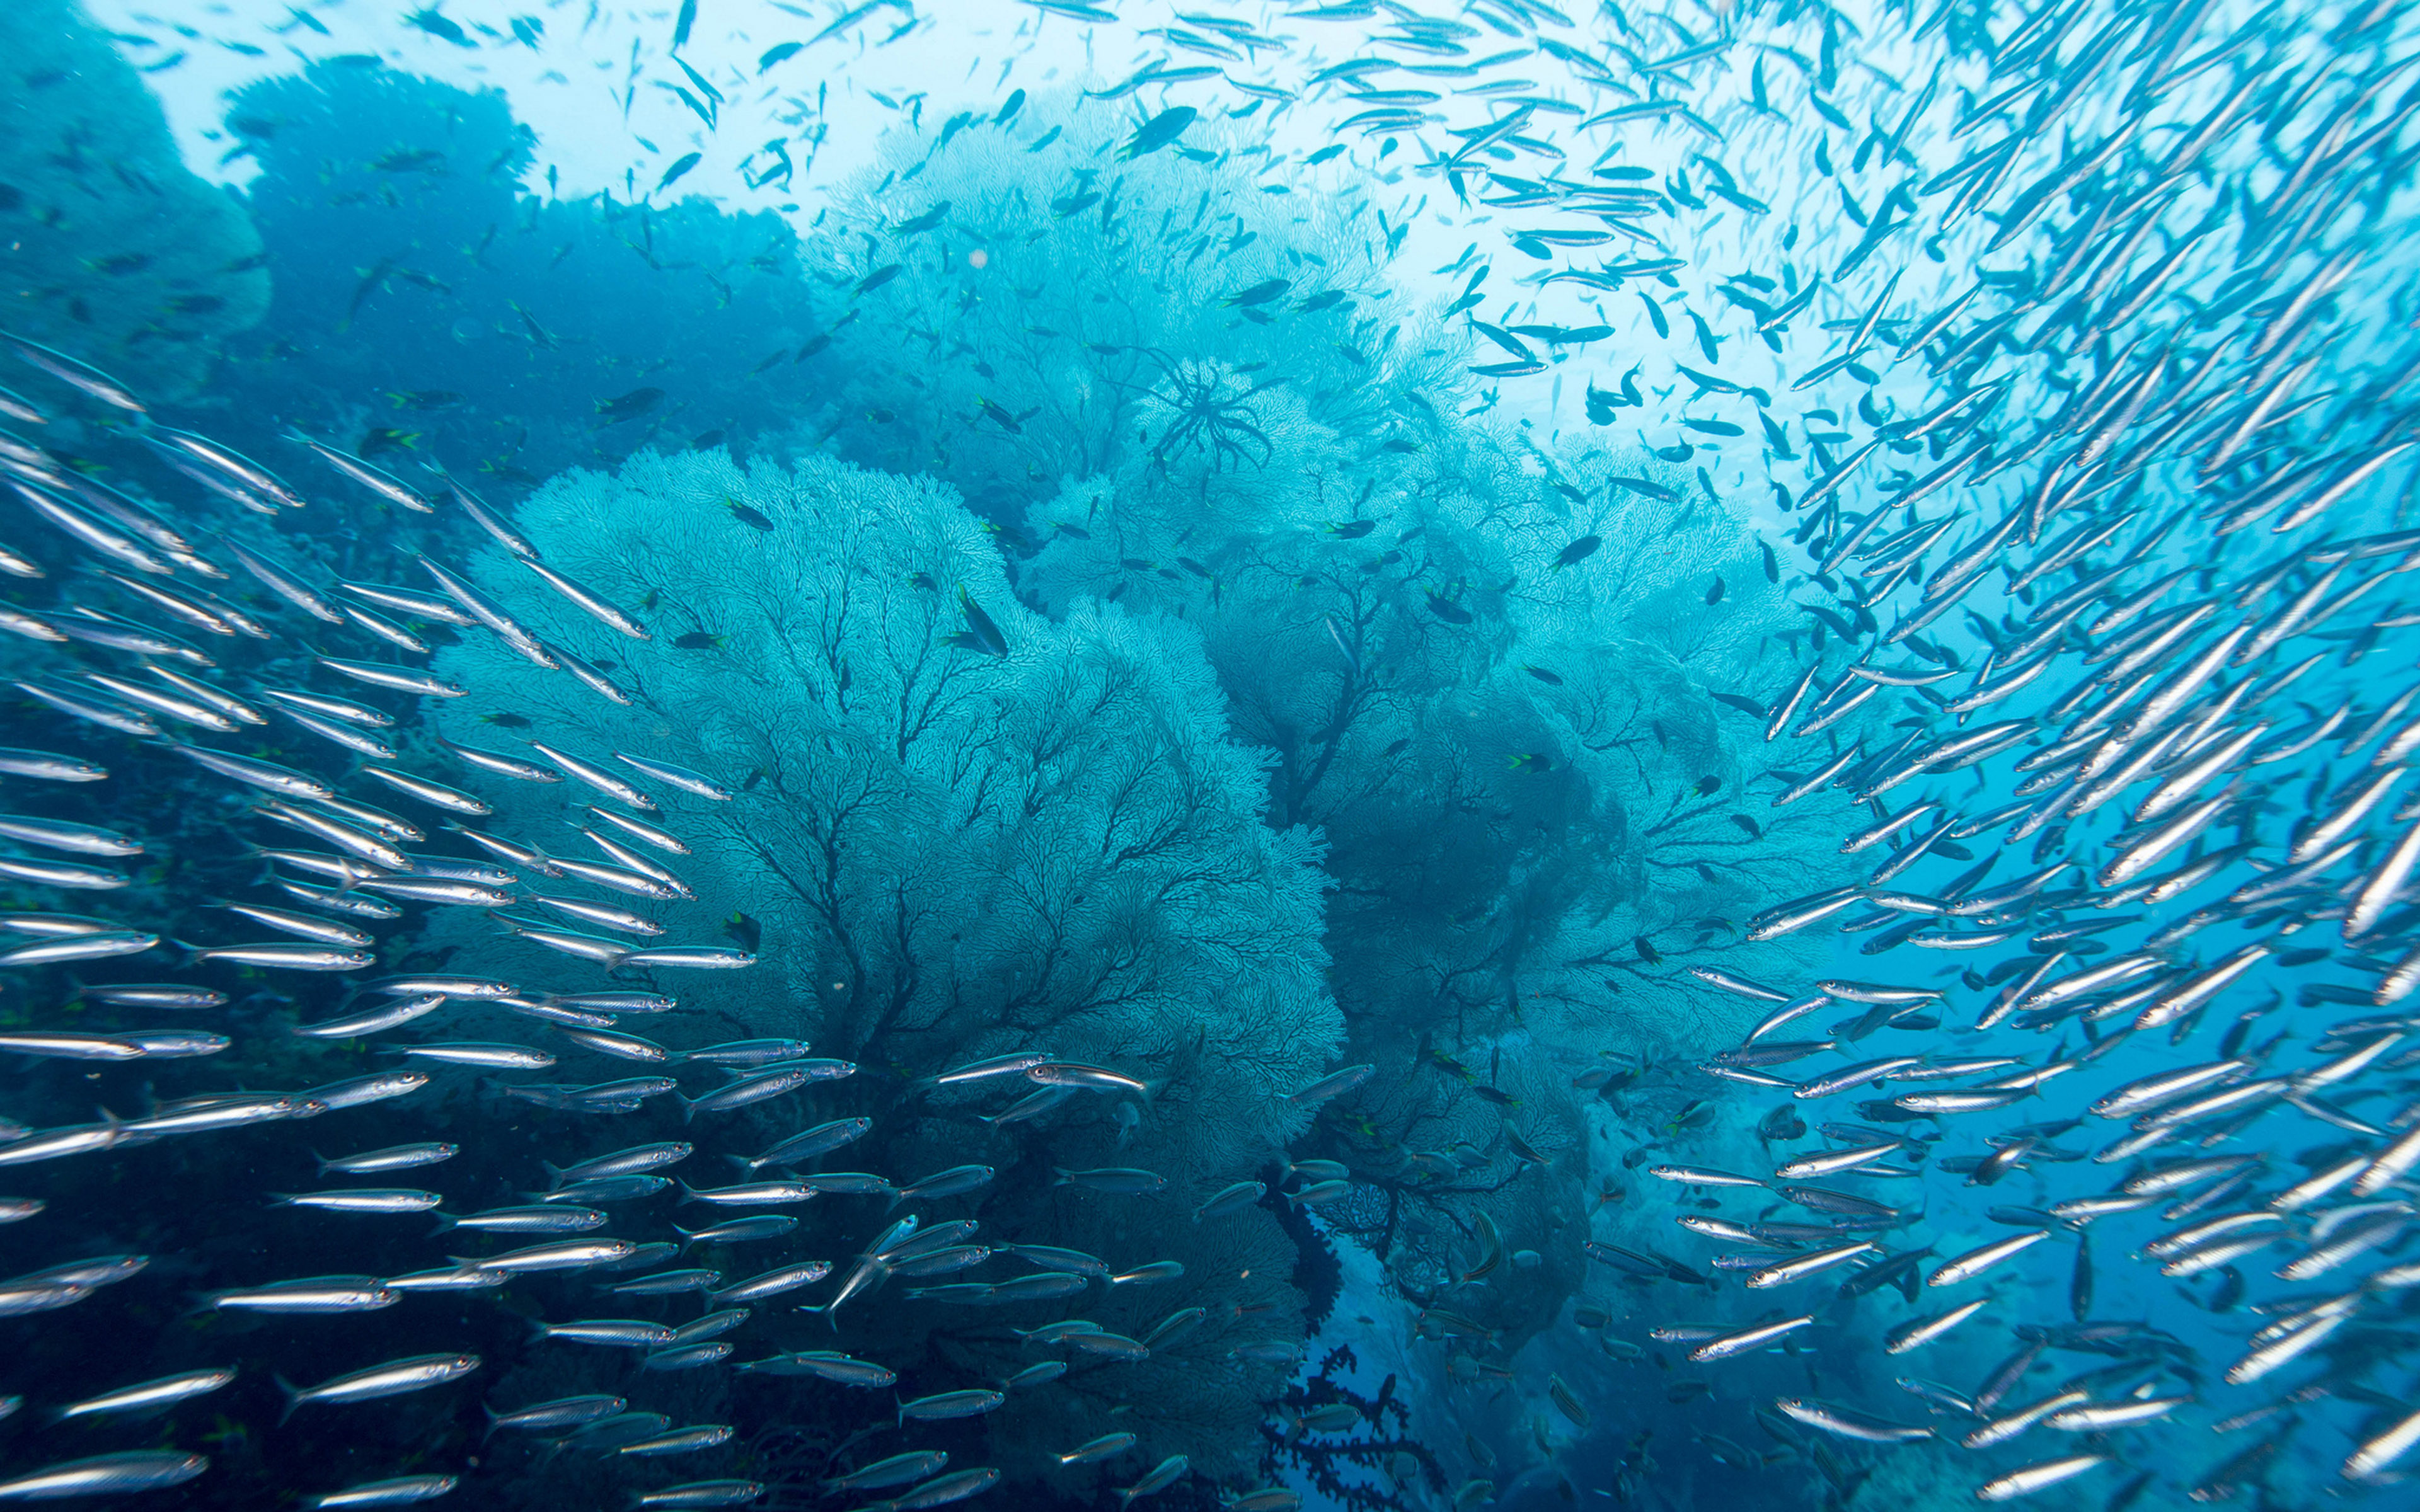 Ocean, Underwater World, Raja Ampat Islands, Indonesia Archipelago